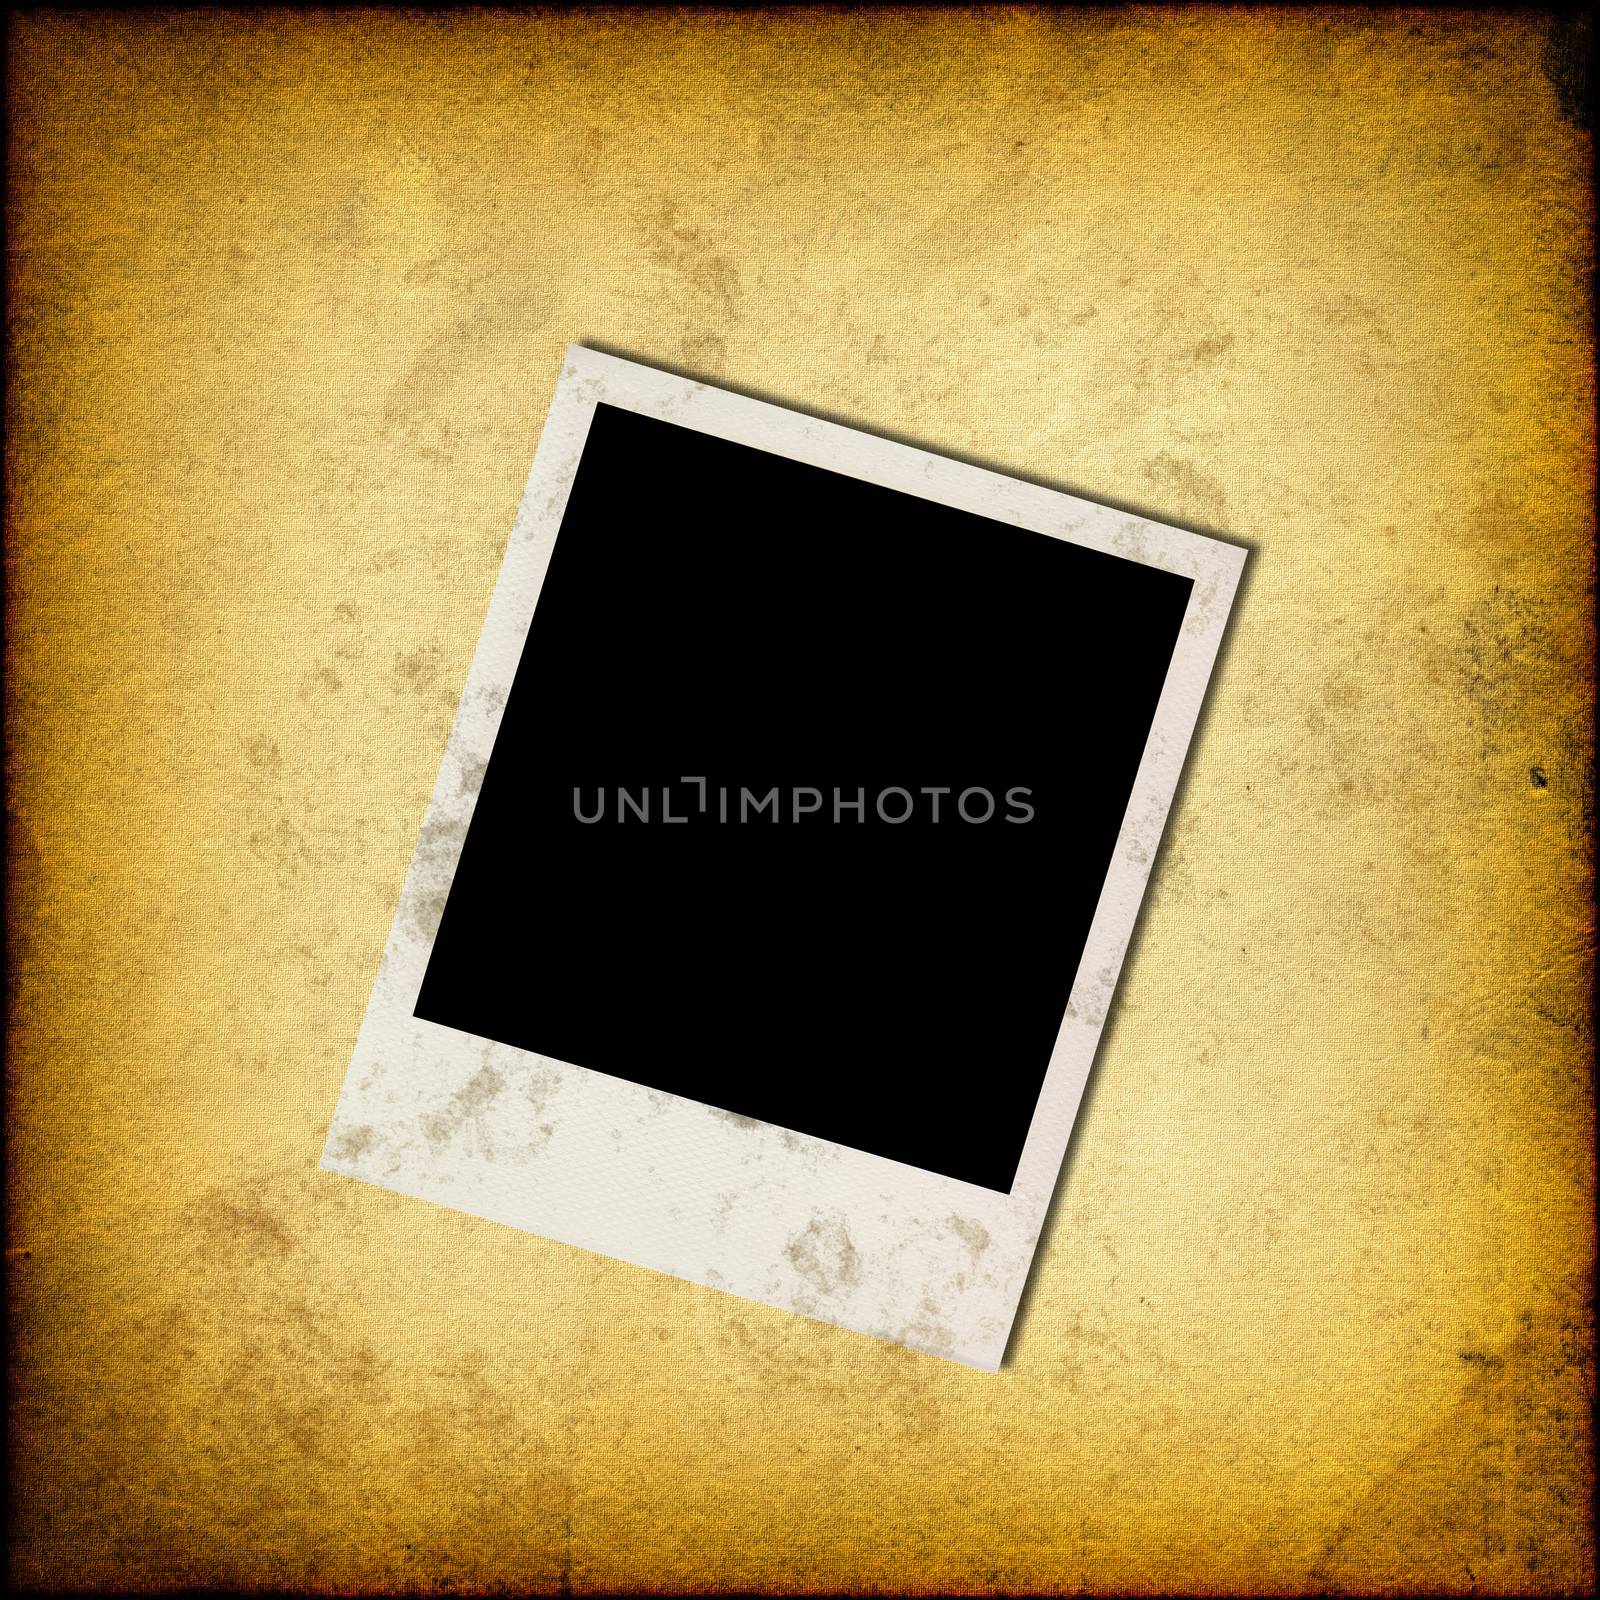 Blank instant photo frame on old grunge paper background